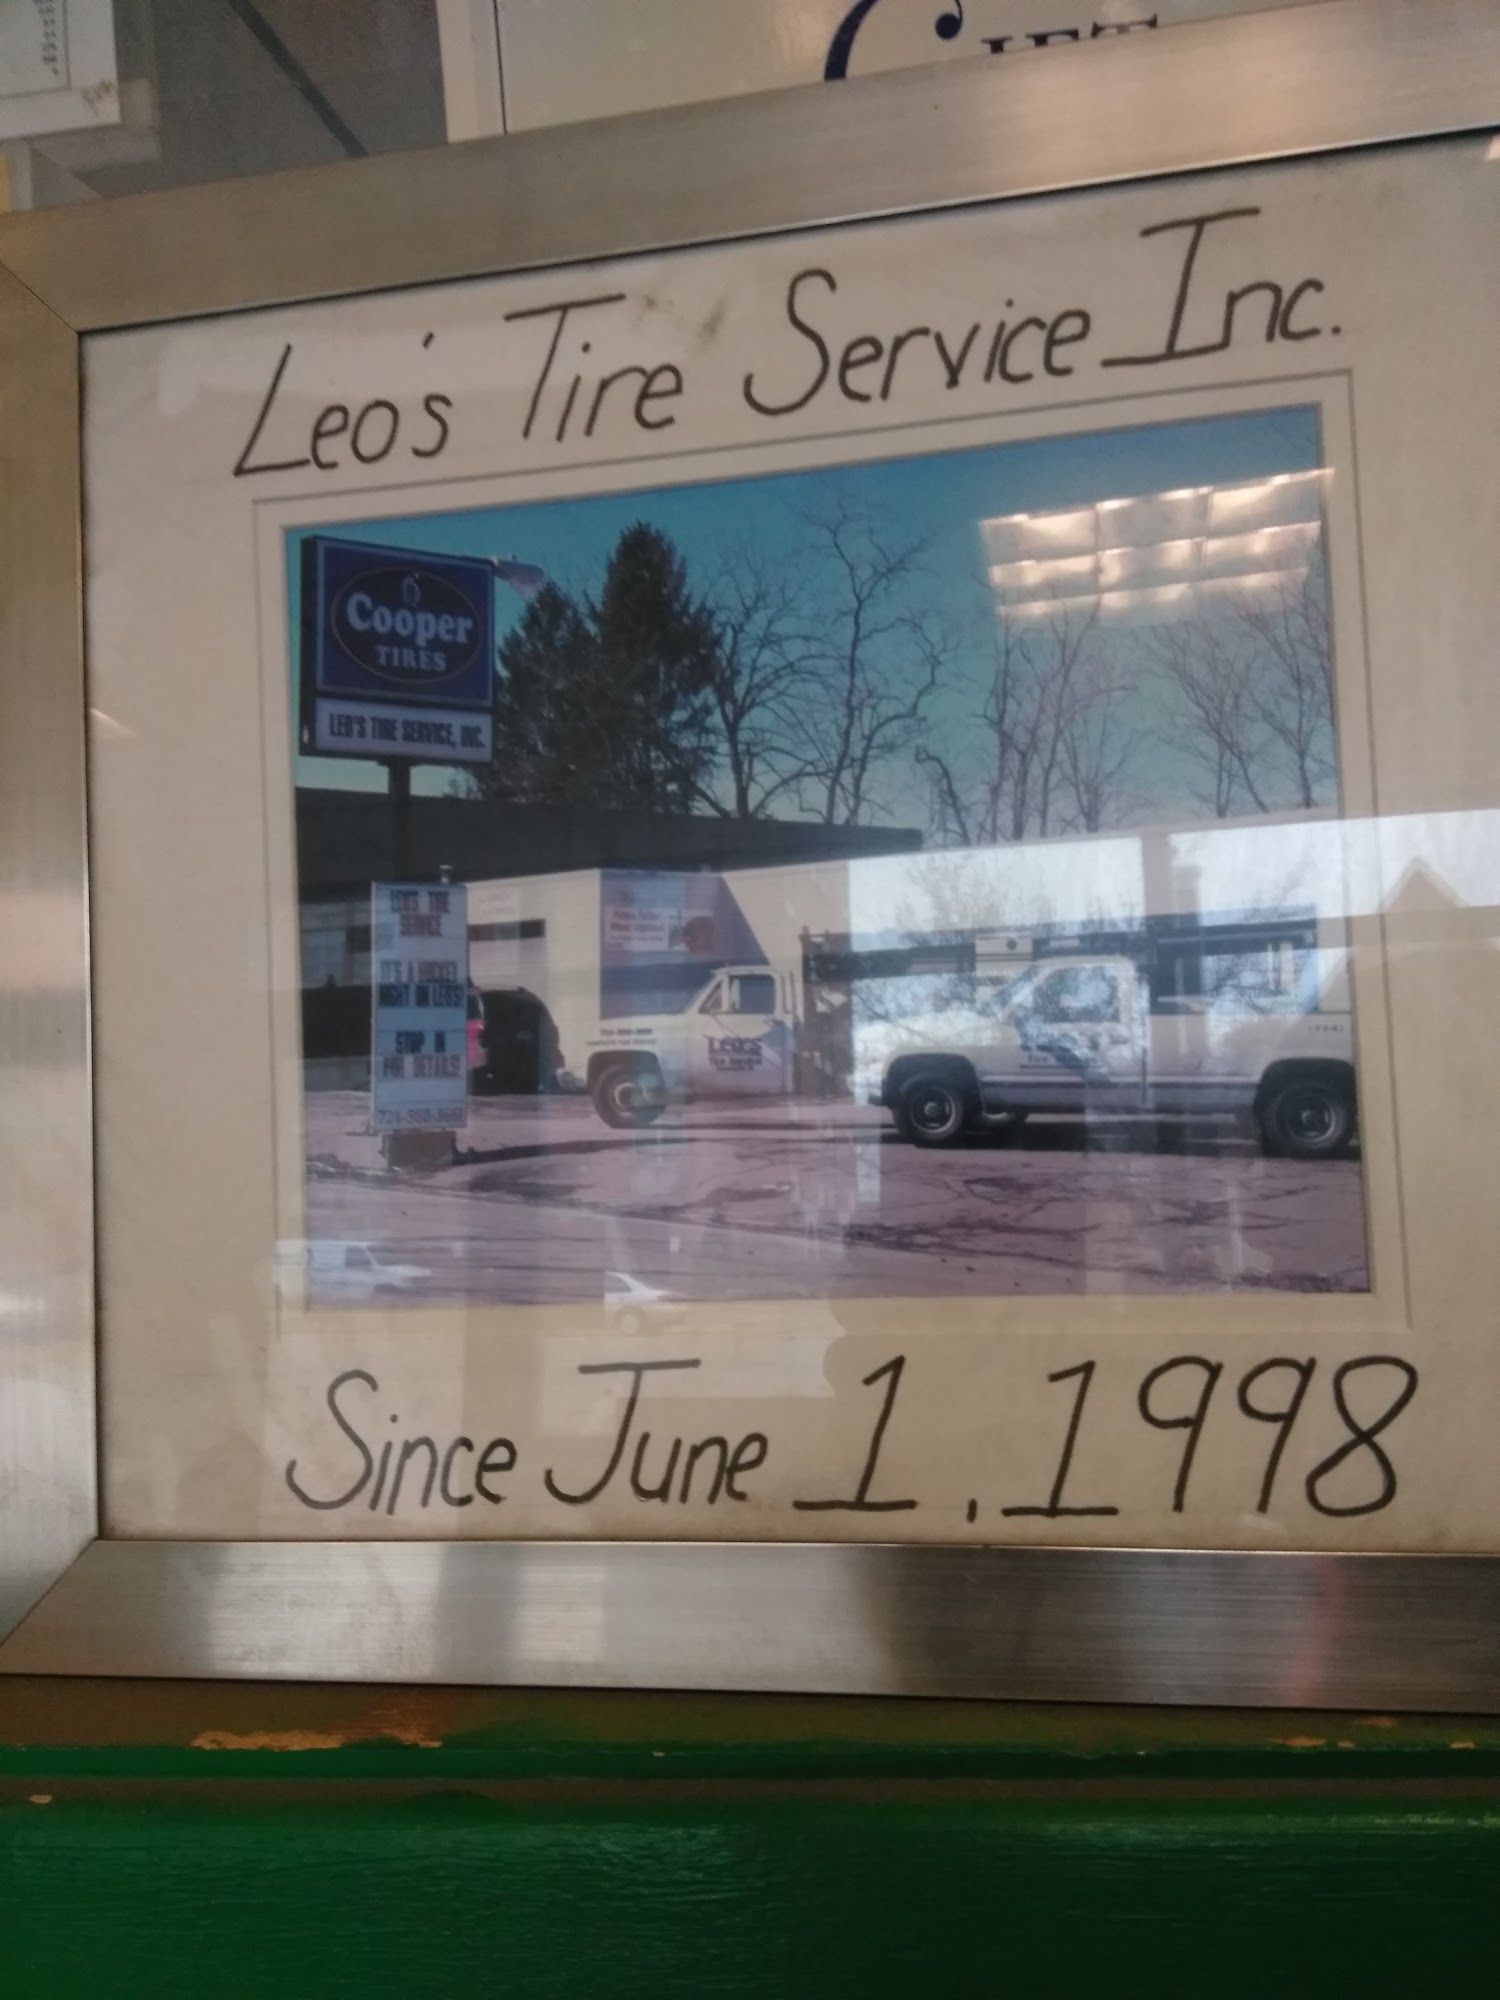 Leo’s Tire Service, Inc.